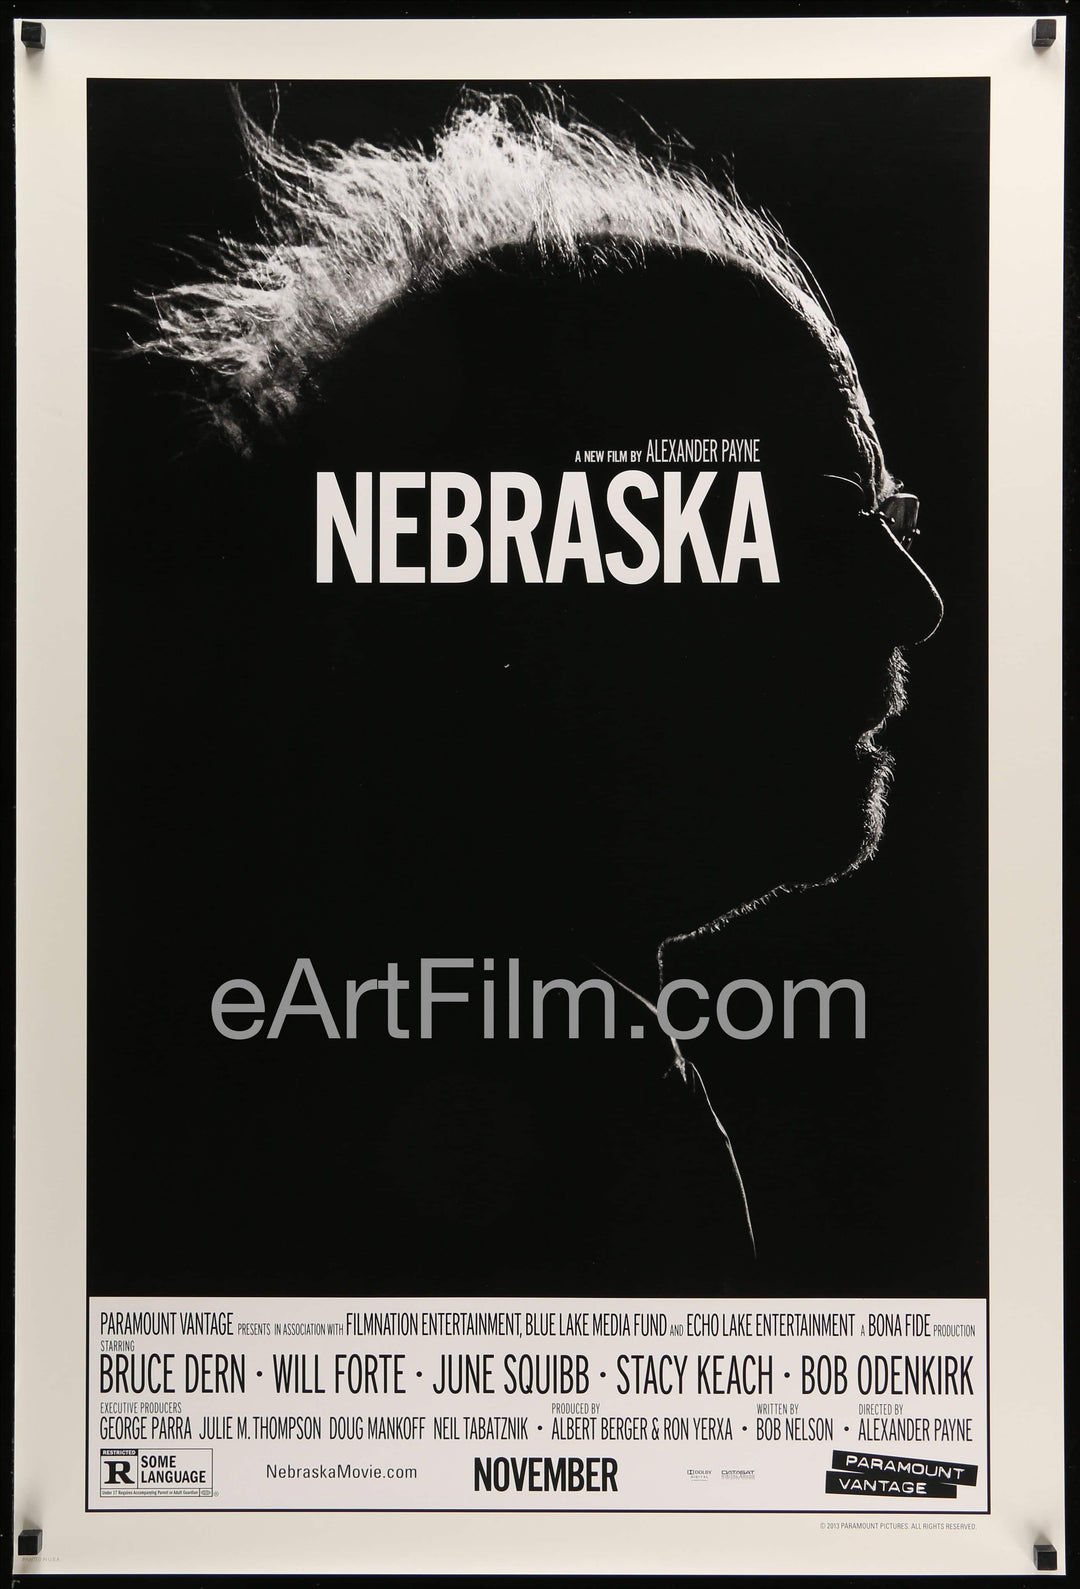 eArtFilm.com U.S Advance Poster (27"x40") Nebraska-Bruce Dern-June Squibb-Stacy Keach-27x40-Advance-Double Sided-2013